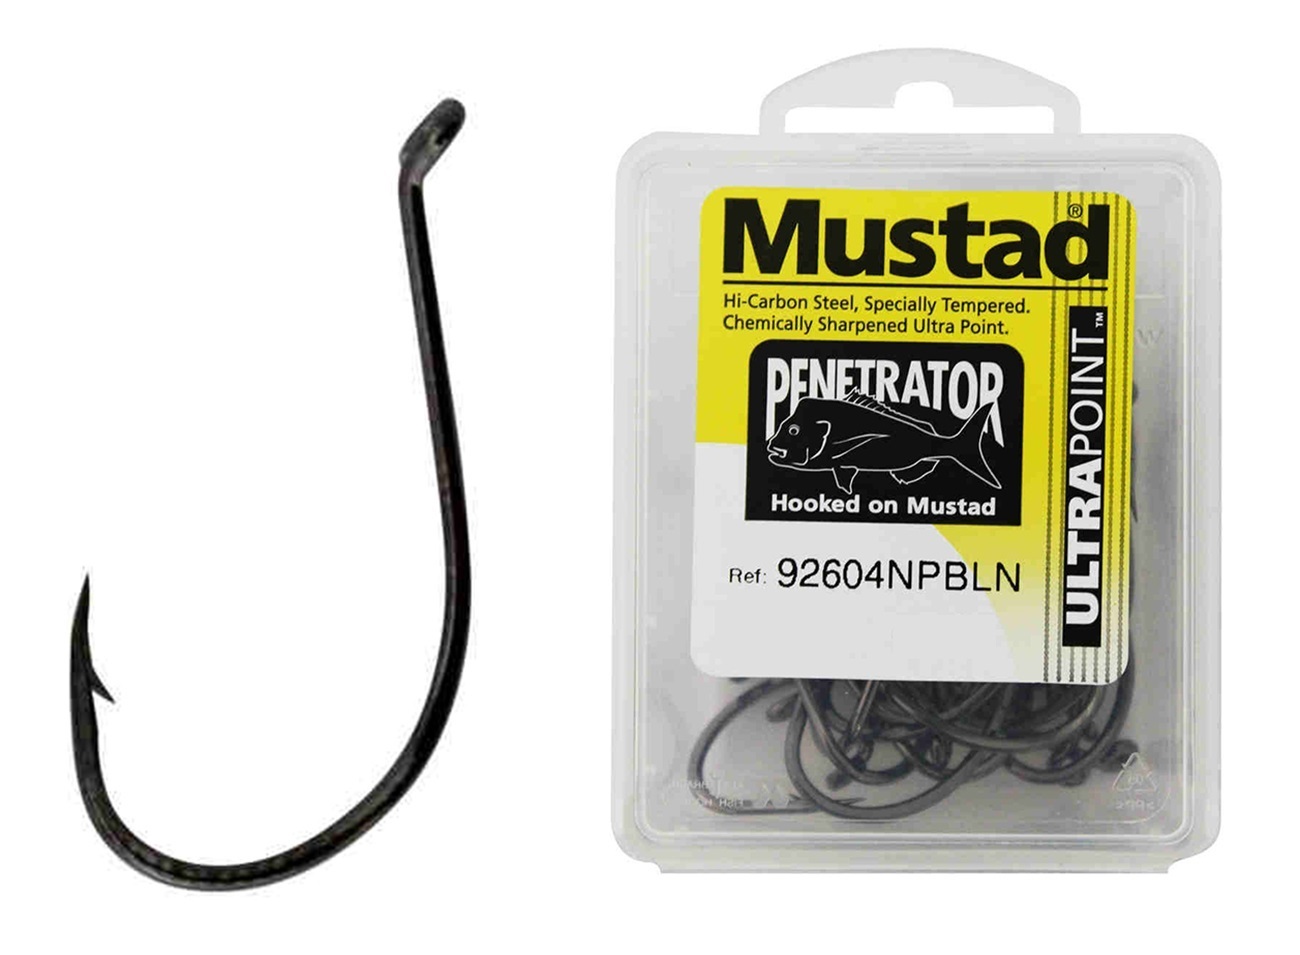 1 Box of Mustad 92604NPBLN Penetrator Chemically Sharpened Fishing